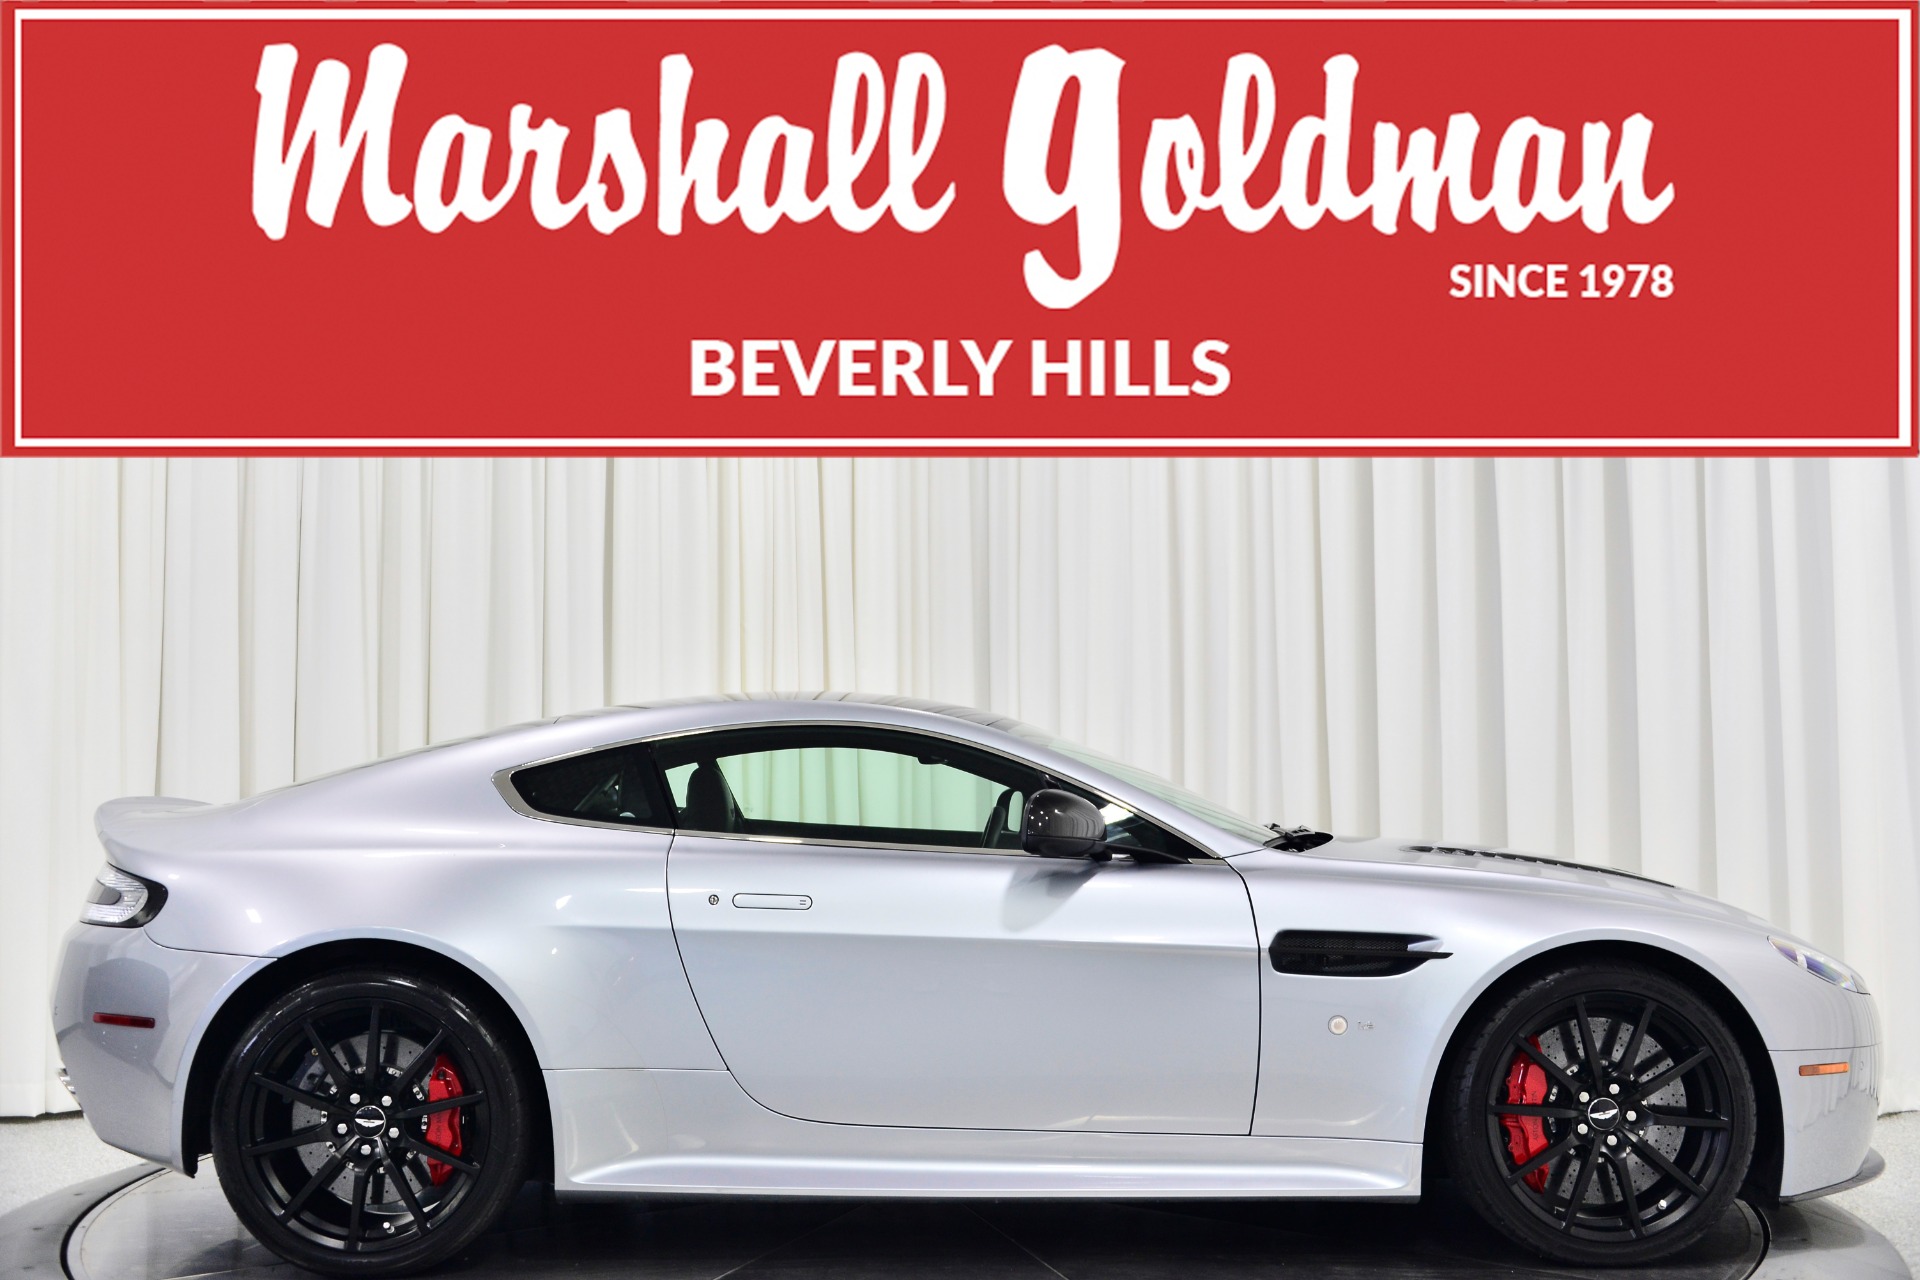 Used 2015 Aston Martin V12 Vantage S For Sale (Sold) | Marshall Goldman  Beverly Hills Stock #BAMVV12